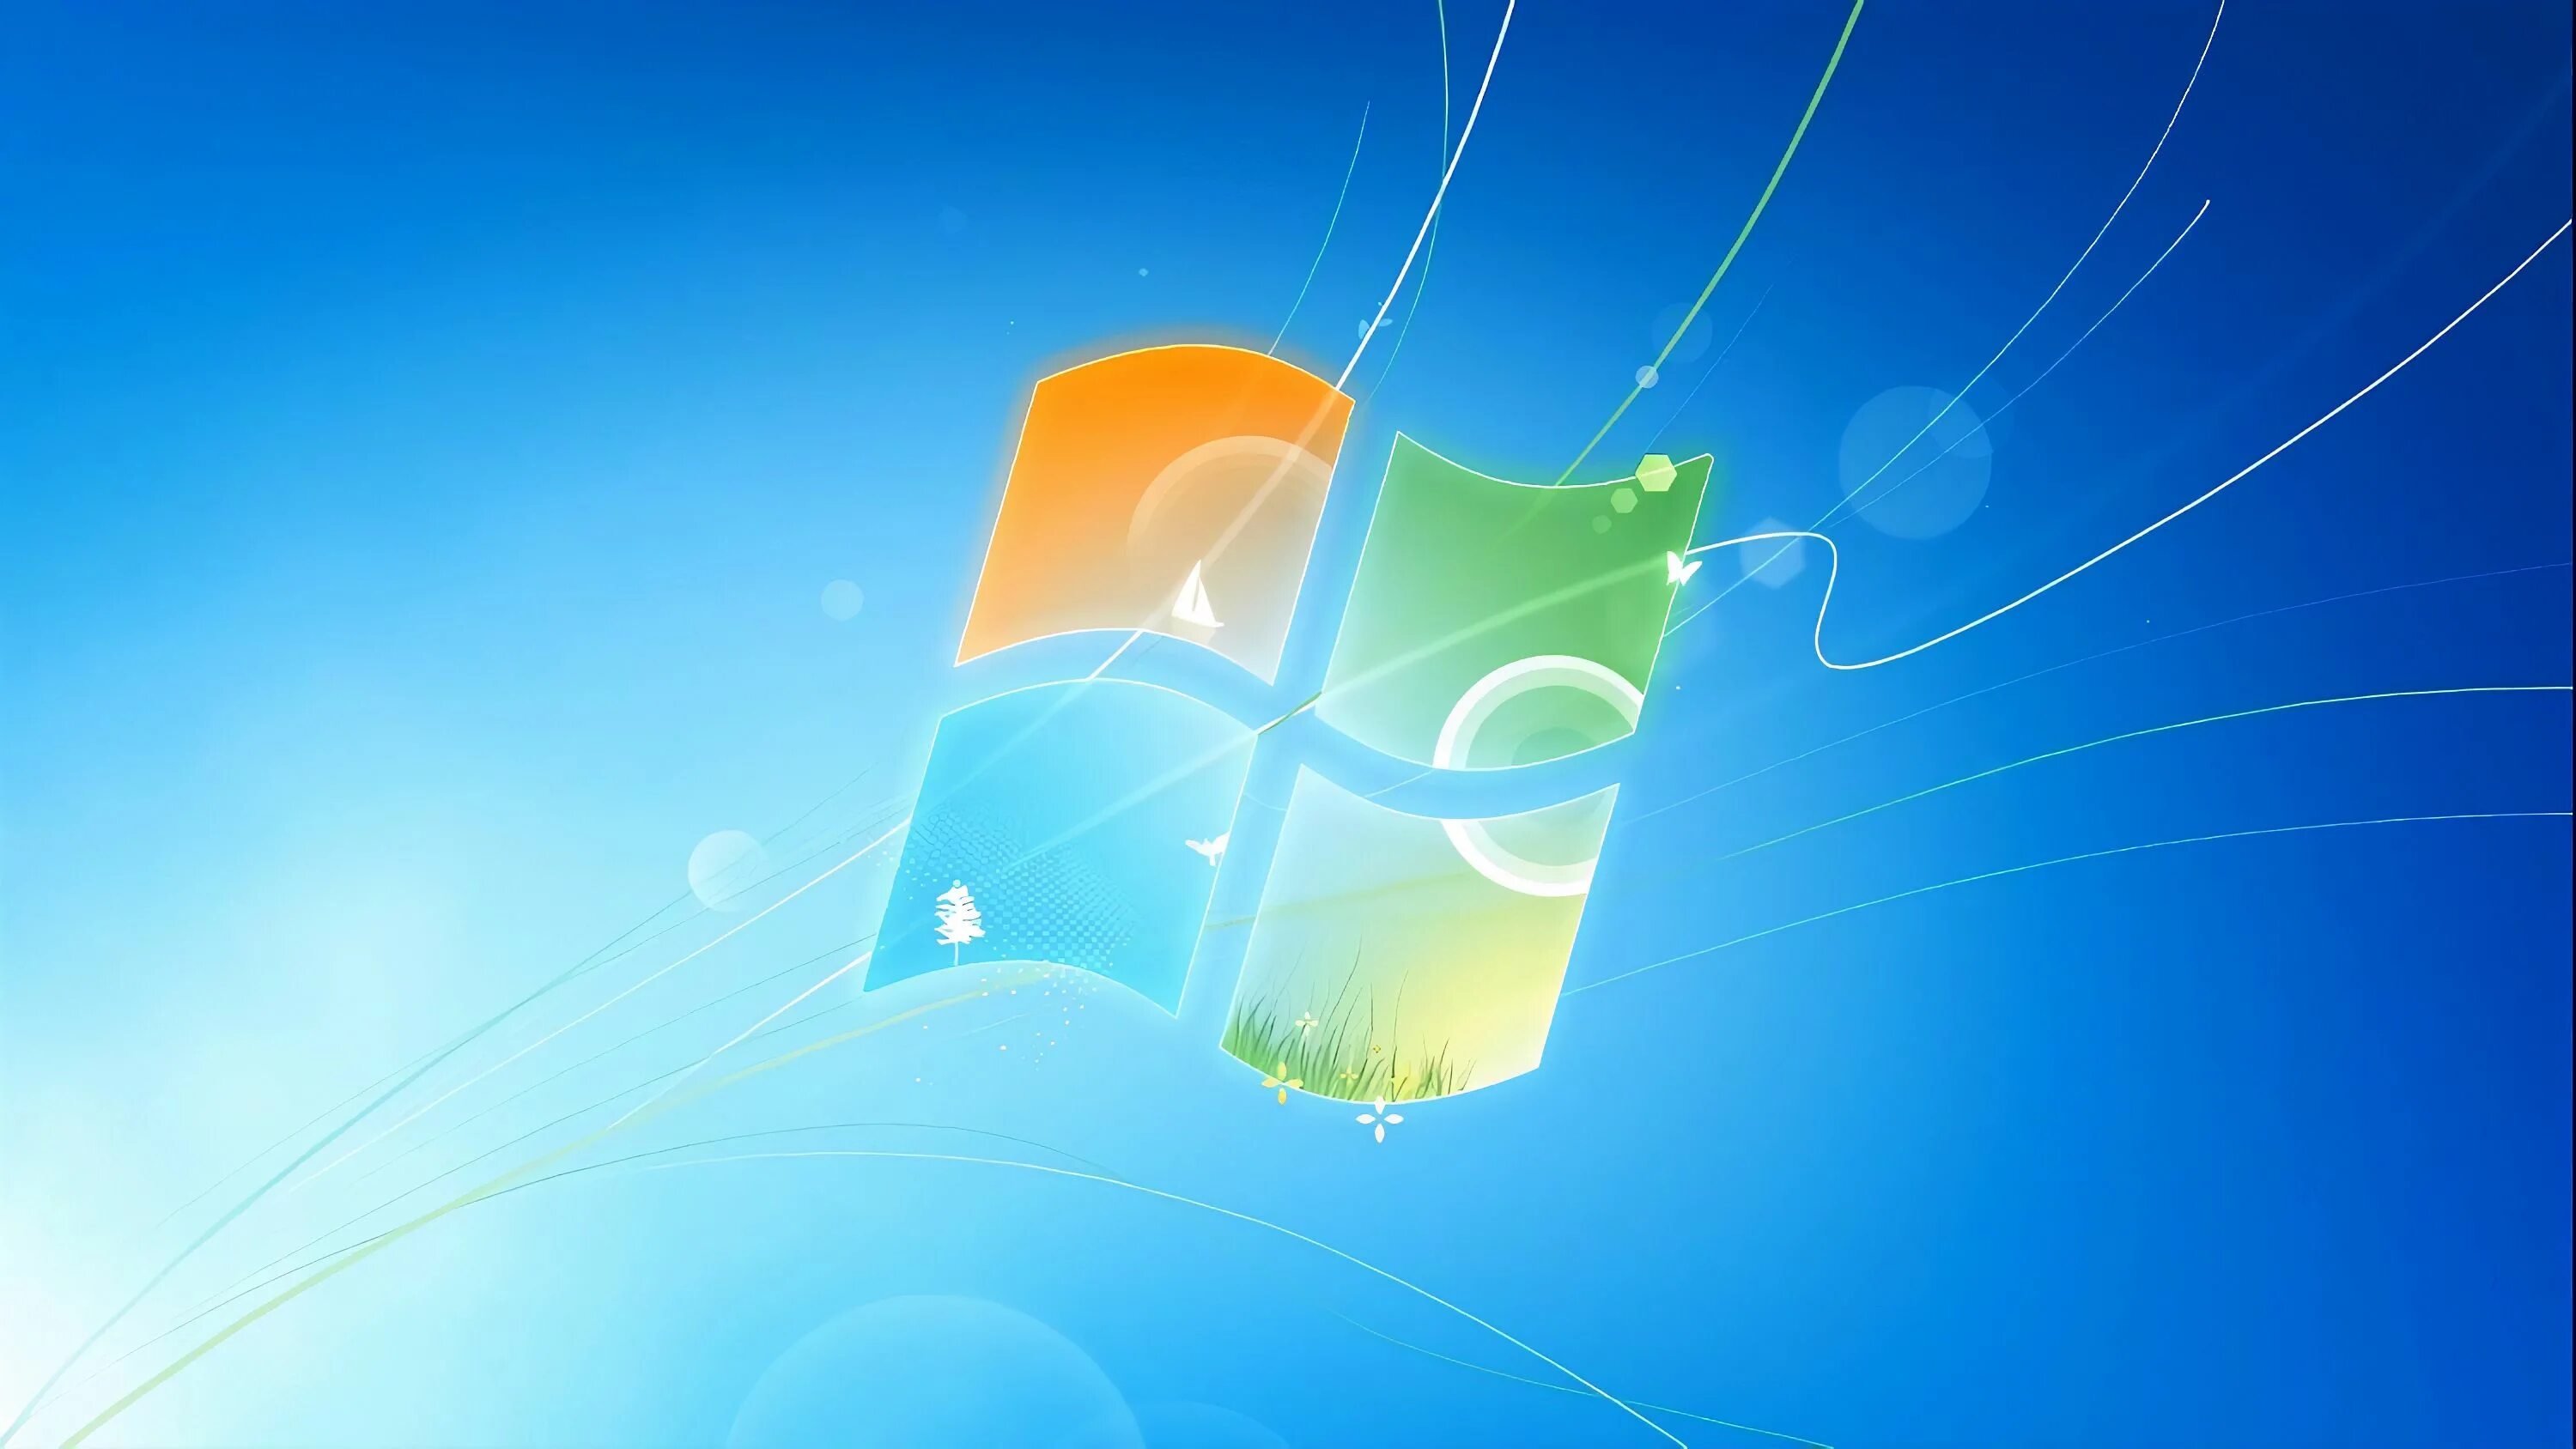 Windows 7 life. Картинки Windows 7. Виндовс 7 рабочий стол. Заставка виндовс 7 стандартная. Картинки на рабочий стол.